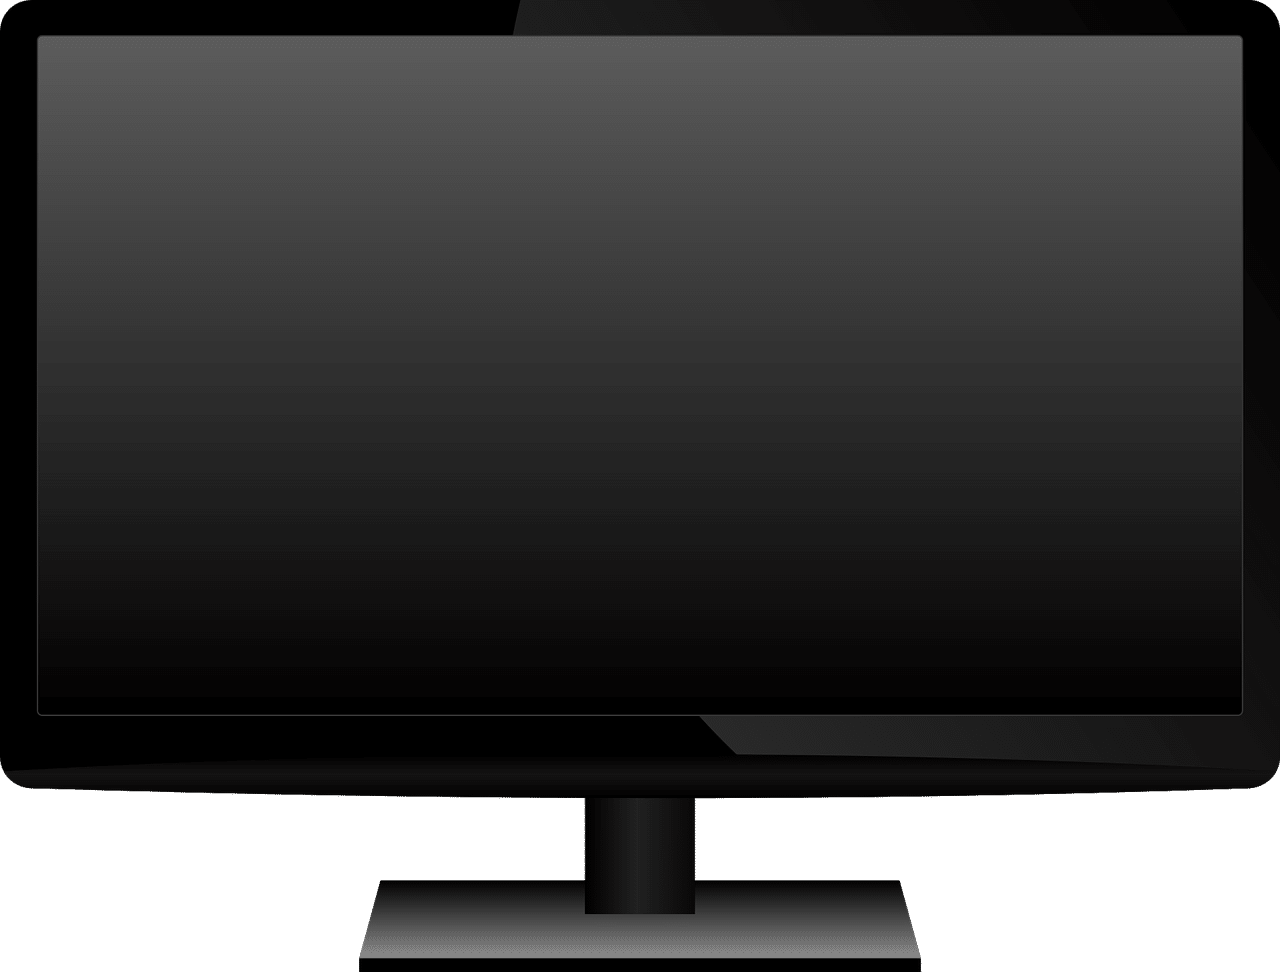 Techniken zur Bildverbesserung bei LCD-Geräten